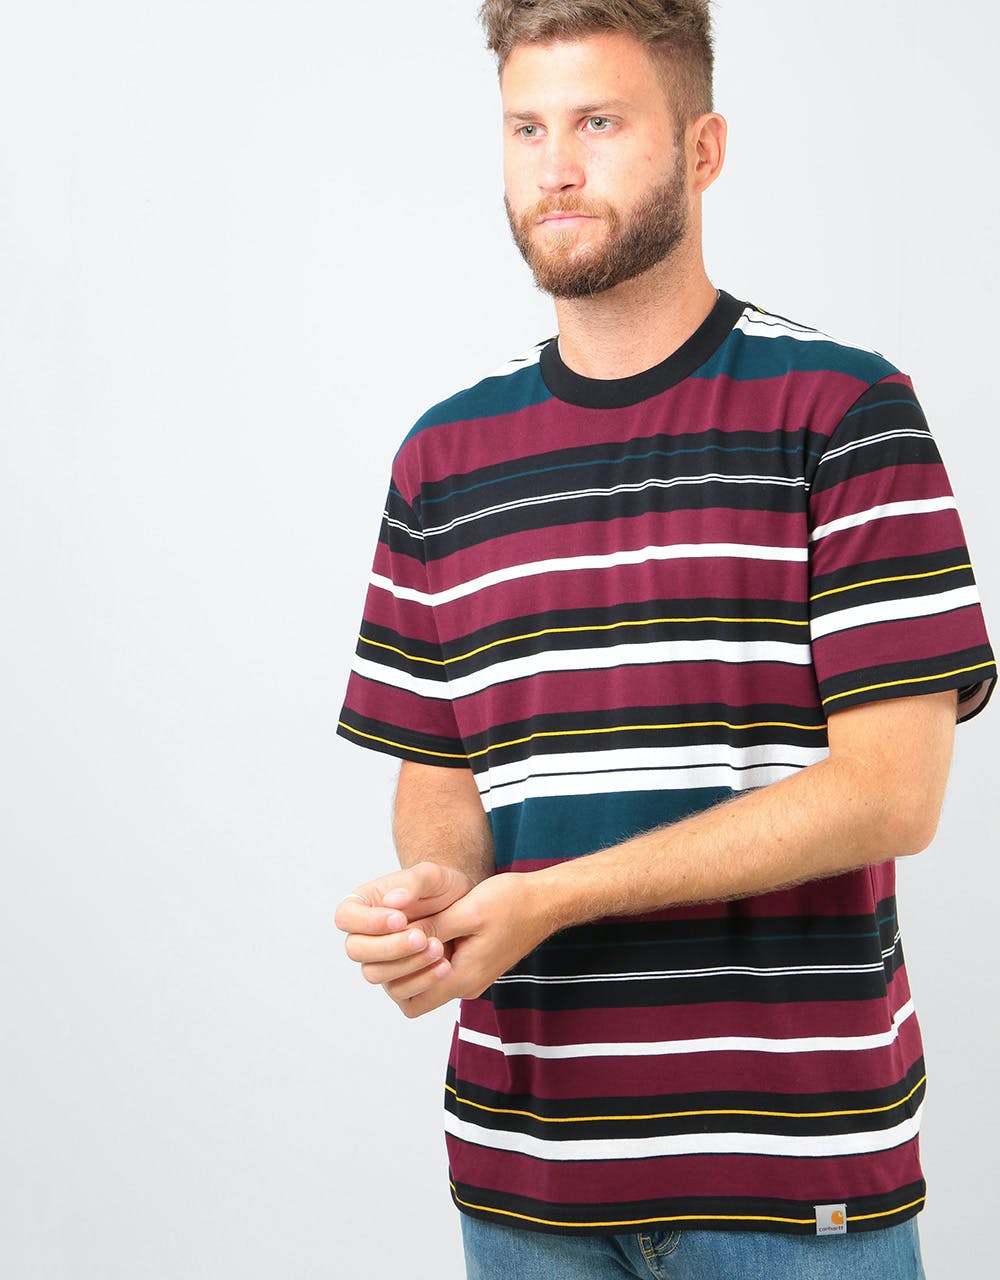 Carhartt WIP S/S Flint T-Shirt - Flint Stripe/Merlot